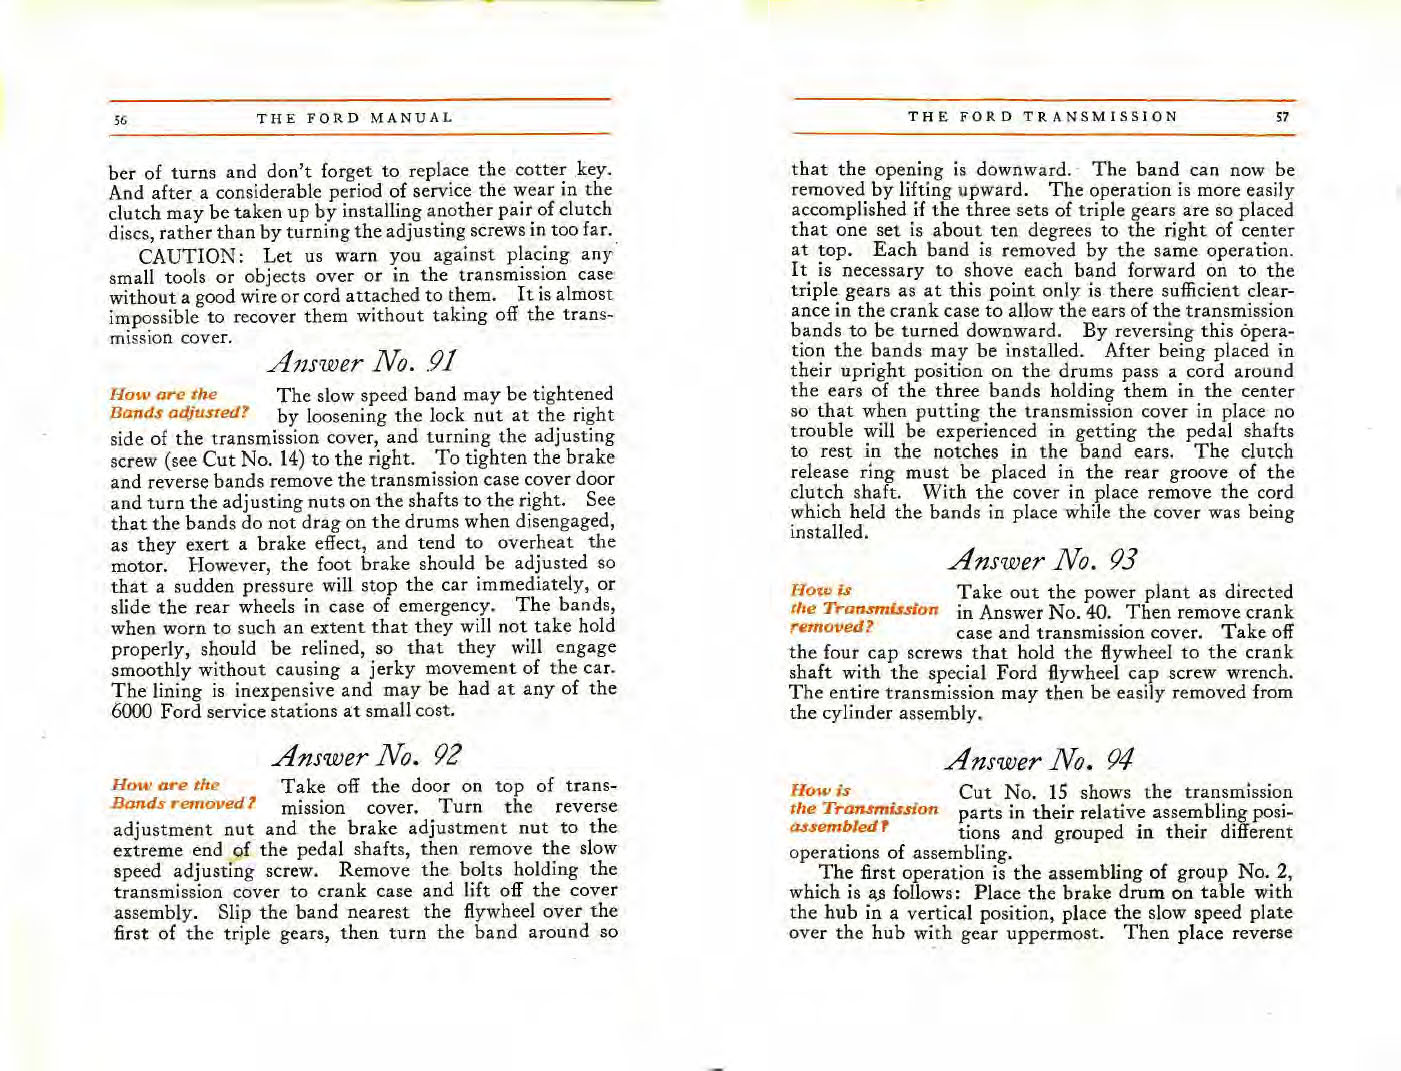 n_1915 Ford Owners Manual-56-57.jpg